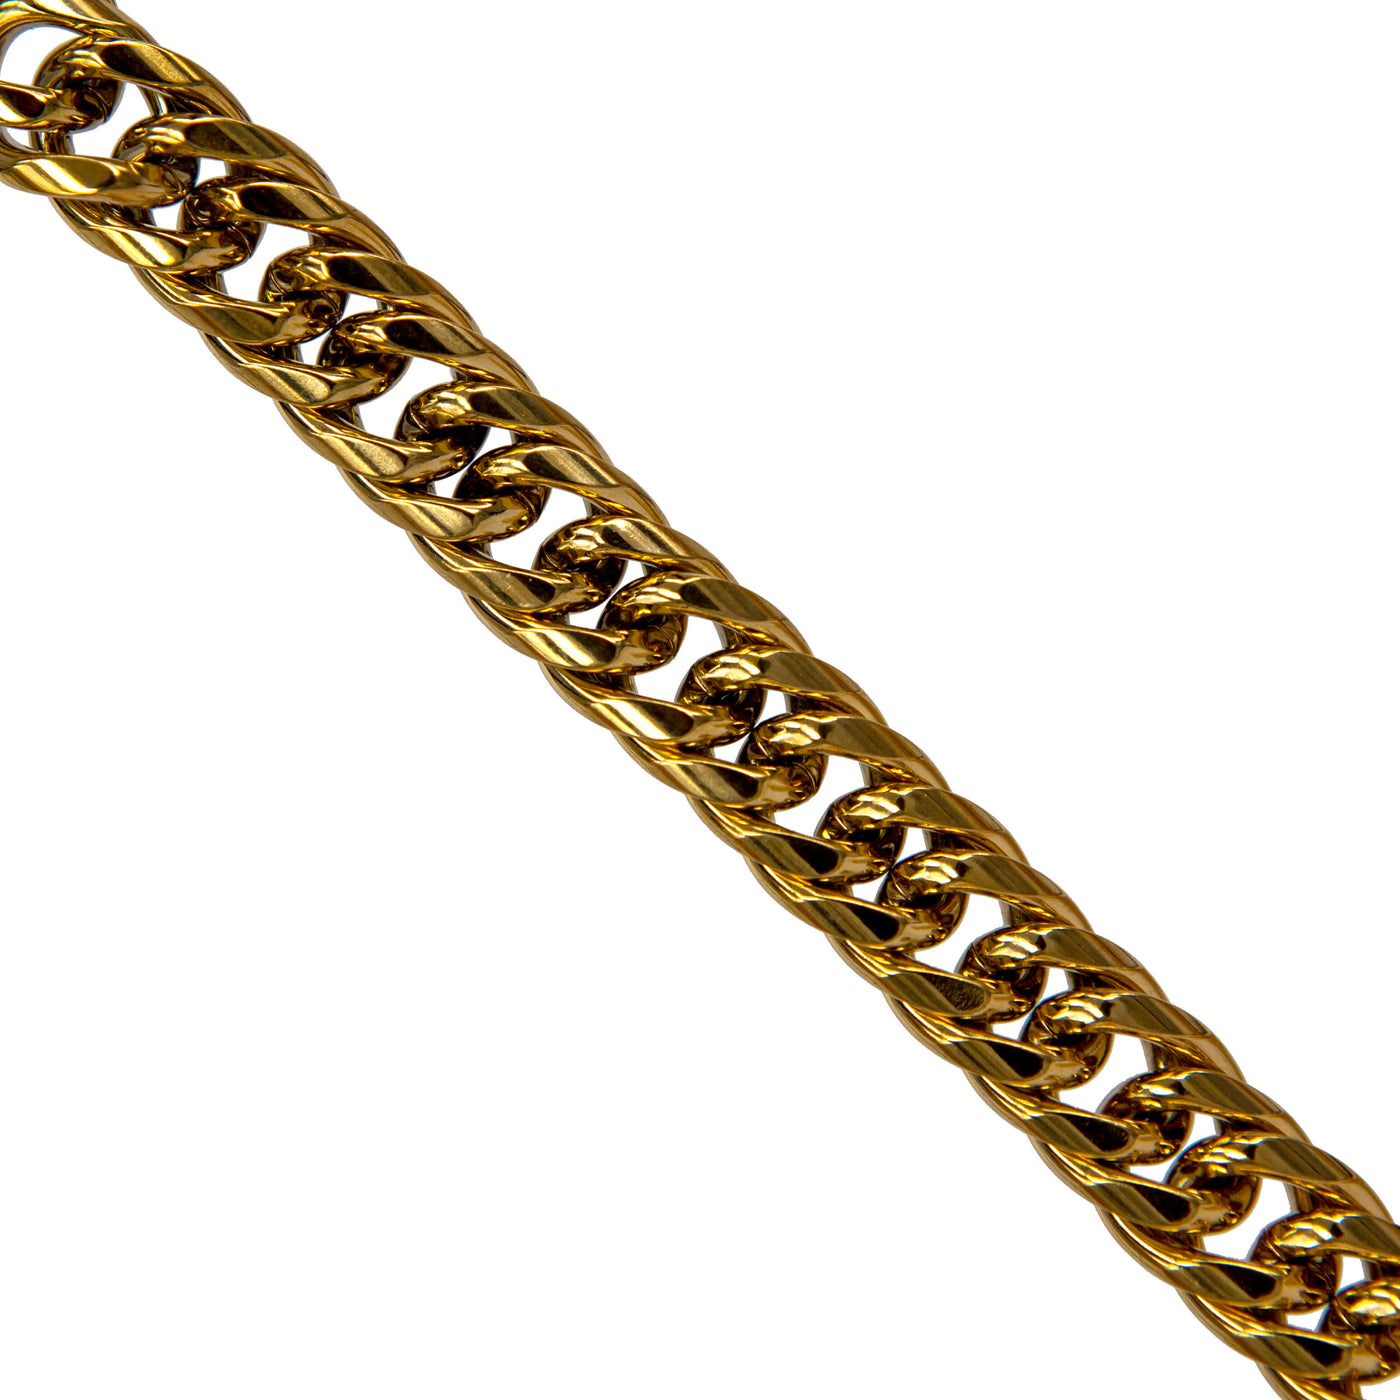 Steel armour chain bracelet 1,2cm wide